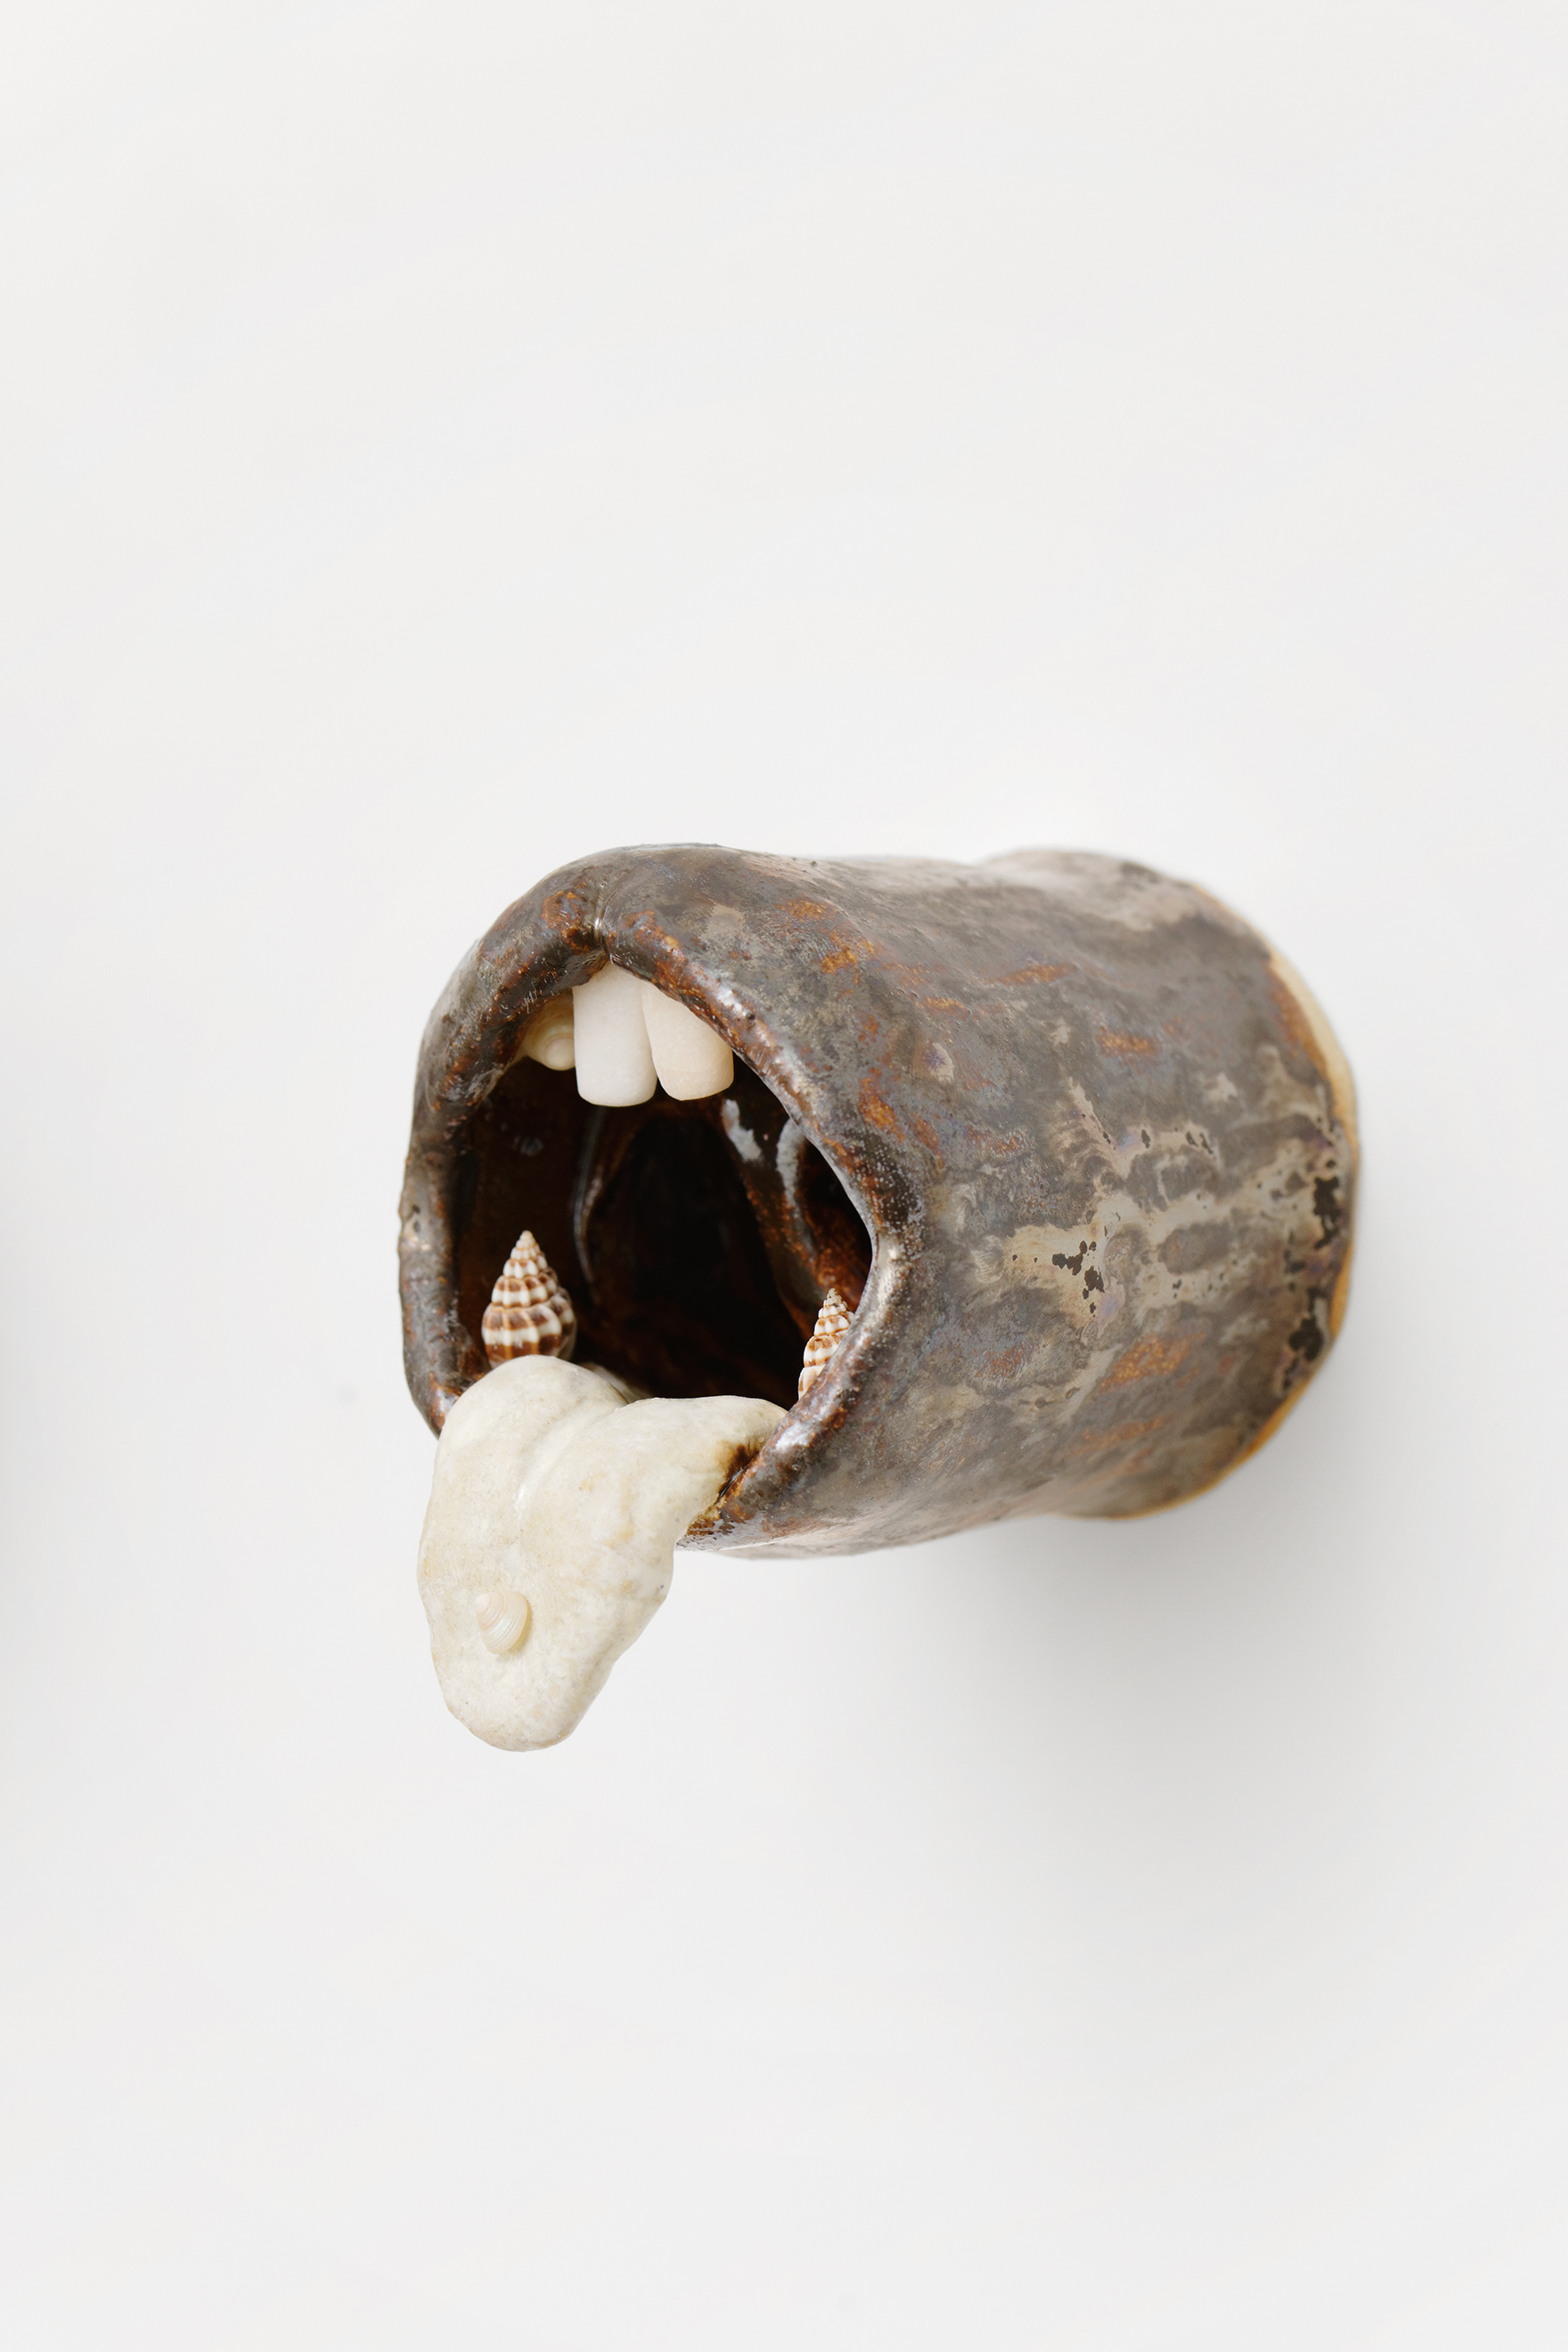 Lou Masduraud, Mini Kiss (with many species), 2023, glazed ceramic, shells, Carrara marble, beach pebbles, 7 x 7 x 8 cm, unique